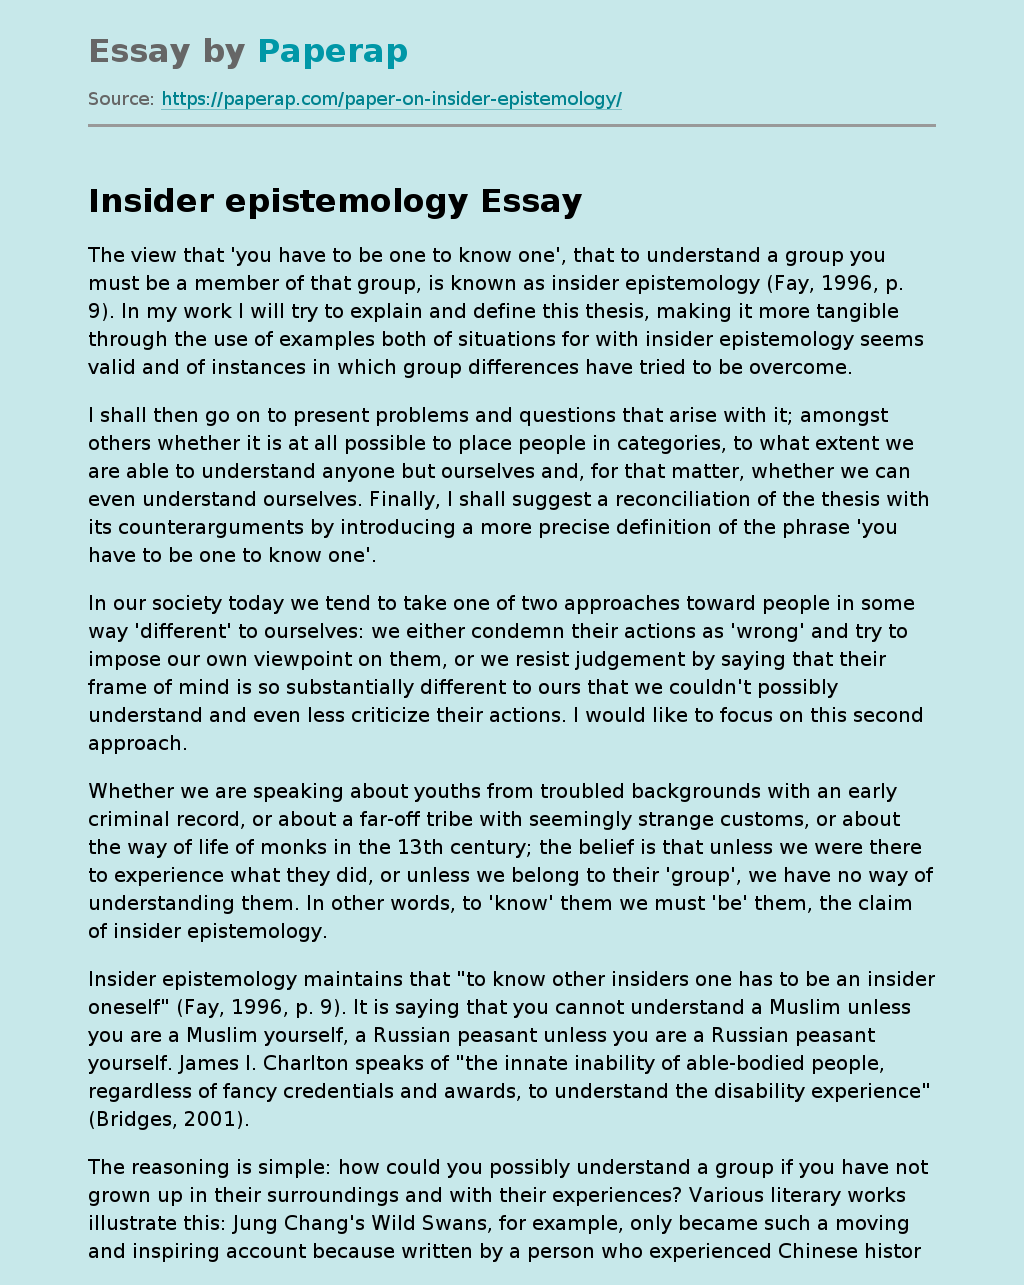 Insider Epistemology: On Existing Problems